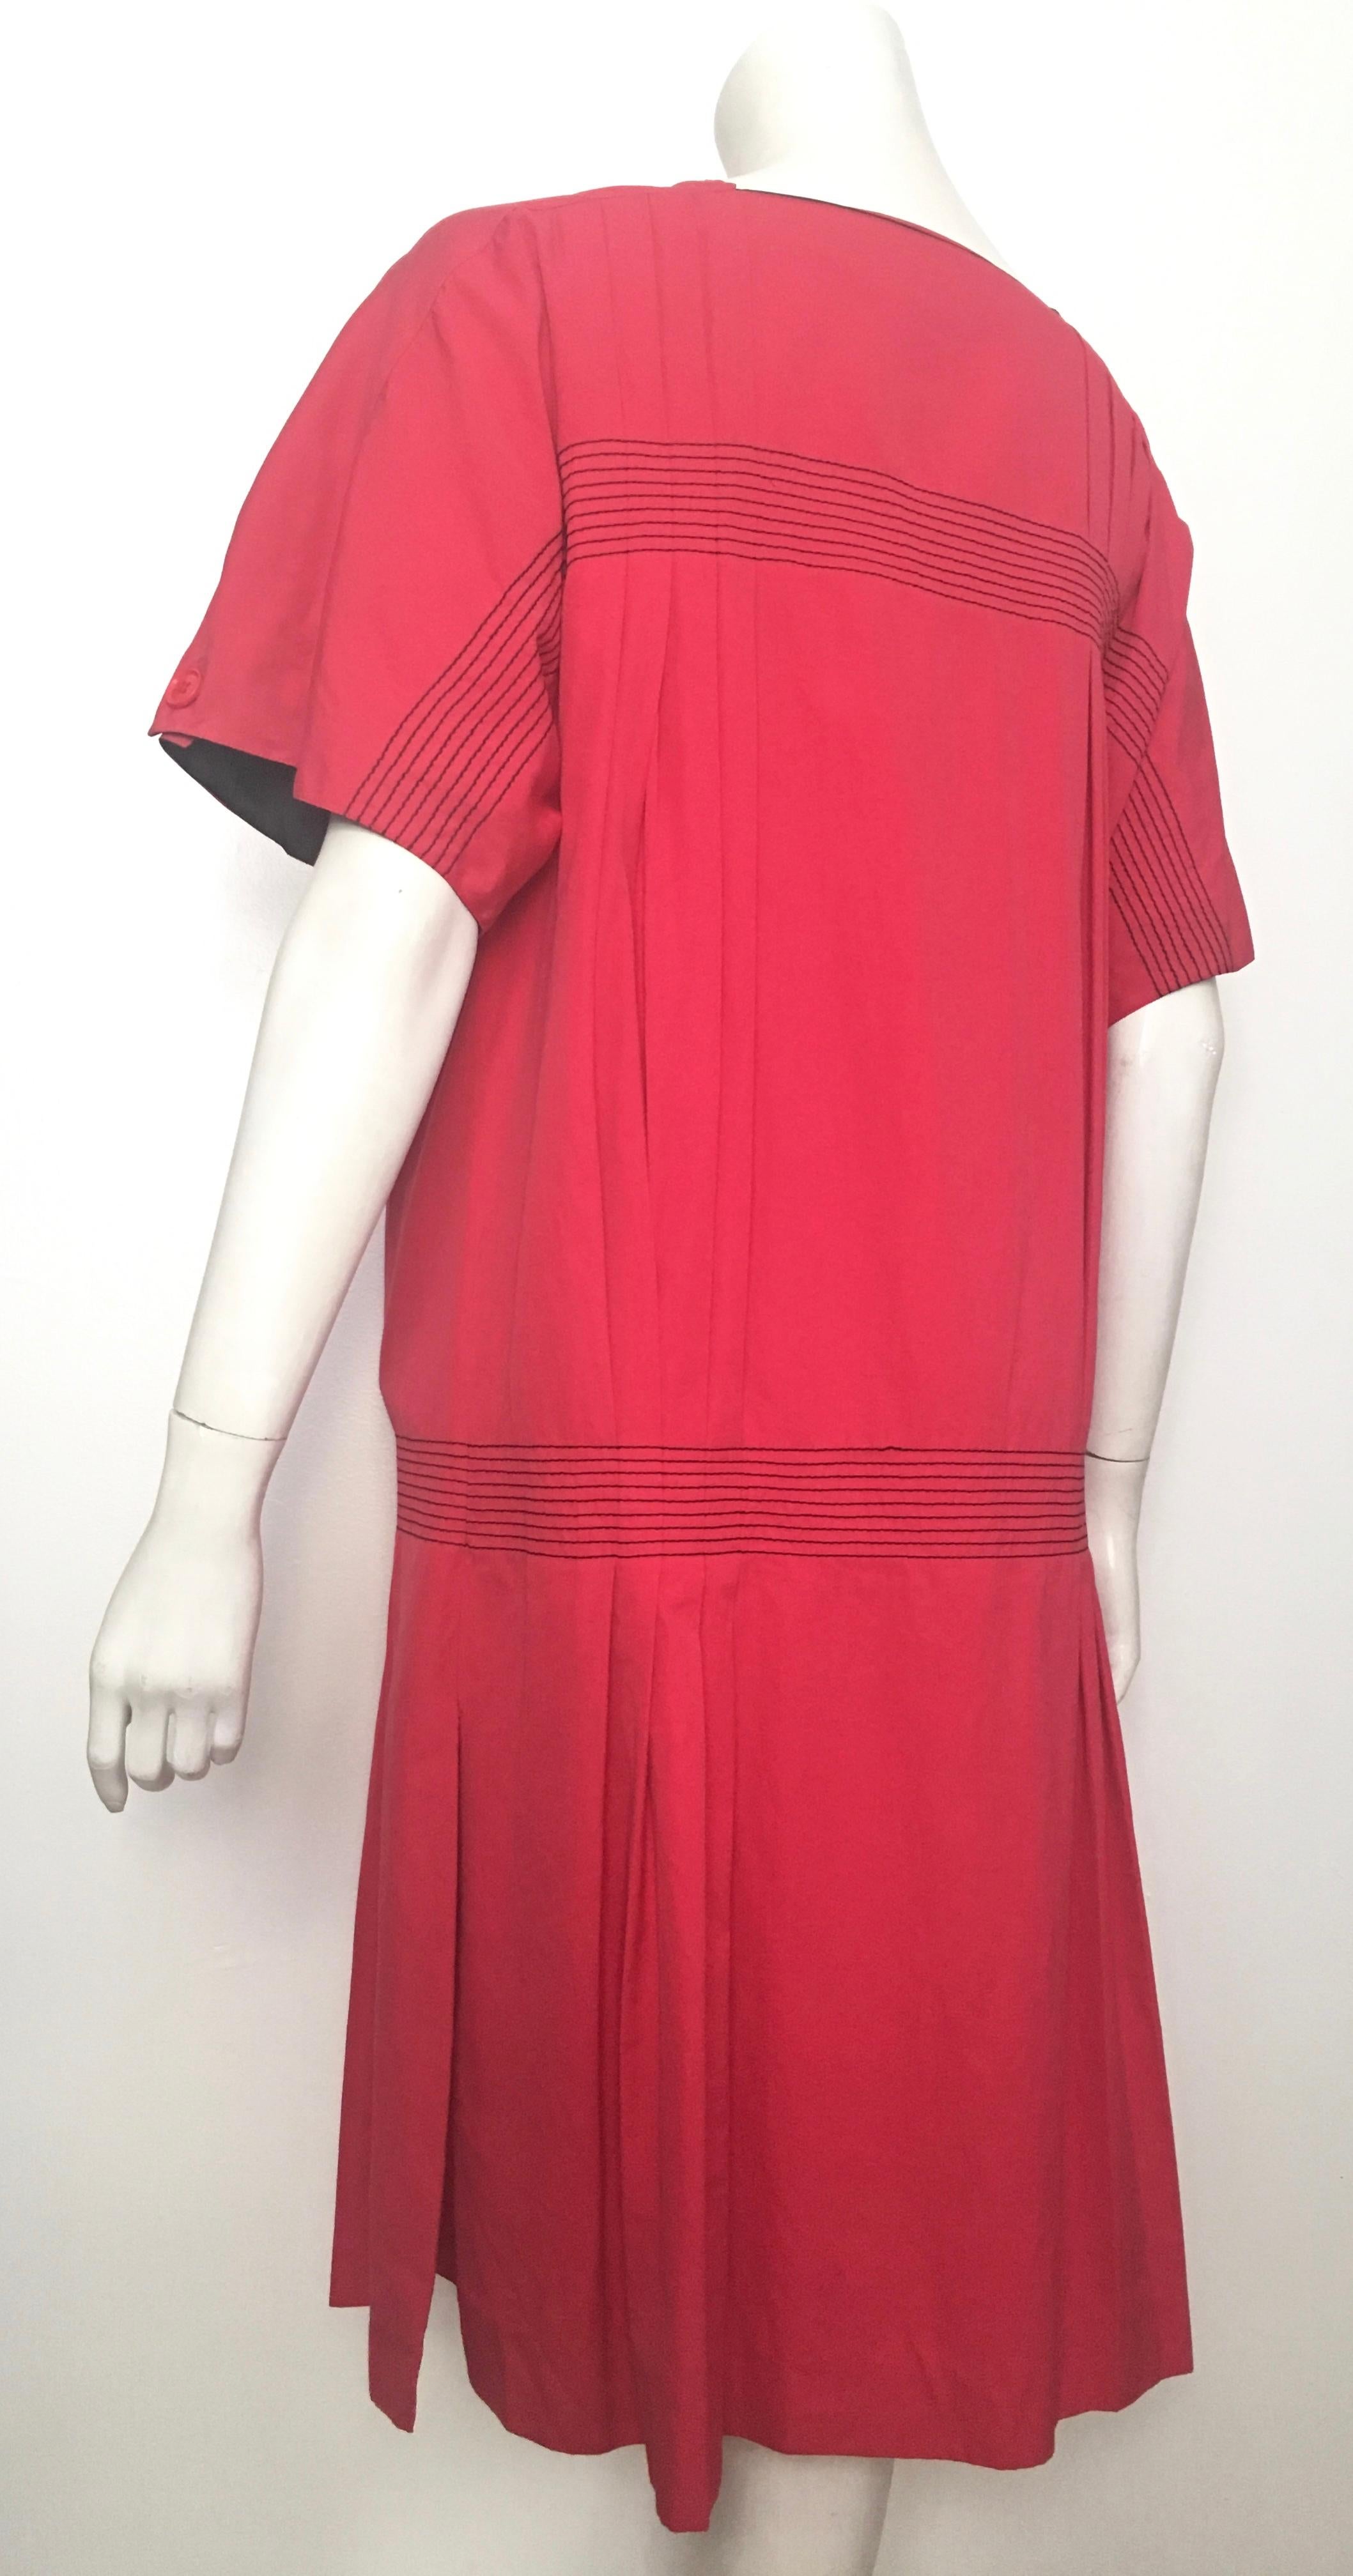 Gianfranco Ferre 1980s Cotton Loose Cut Dress Size 6 / 8. For Sale 3